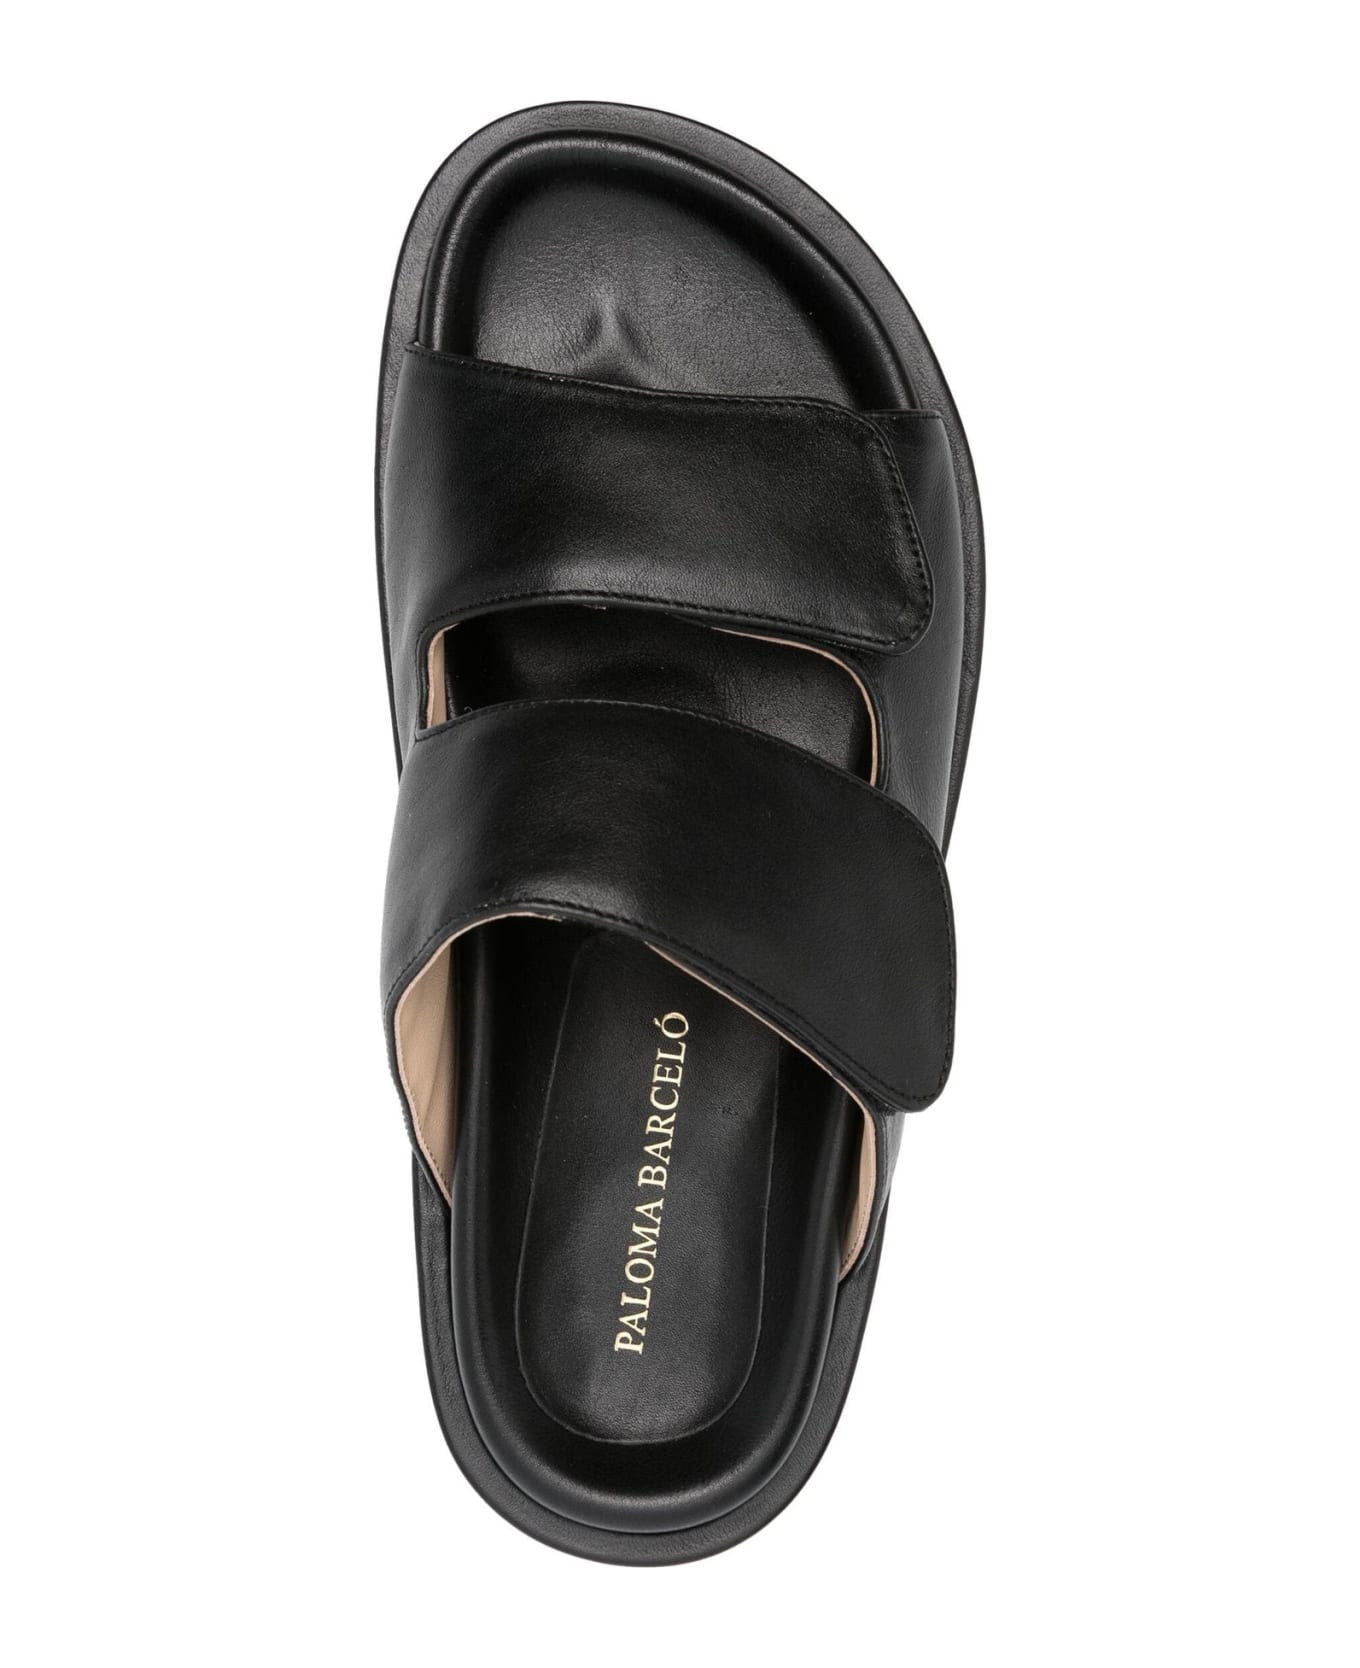 Paloma Barceló Black Laya Leather Sandals - Black